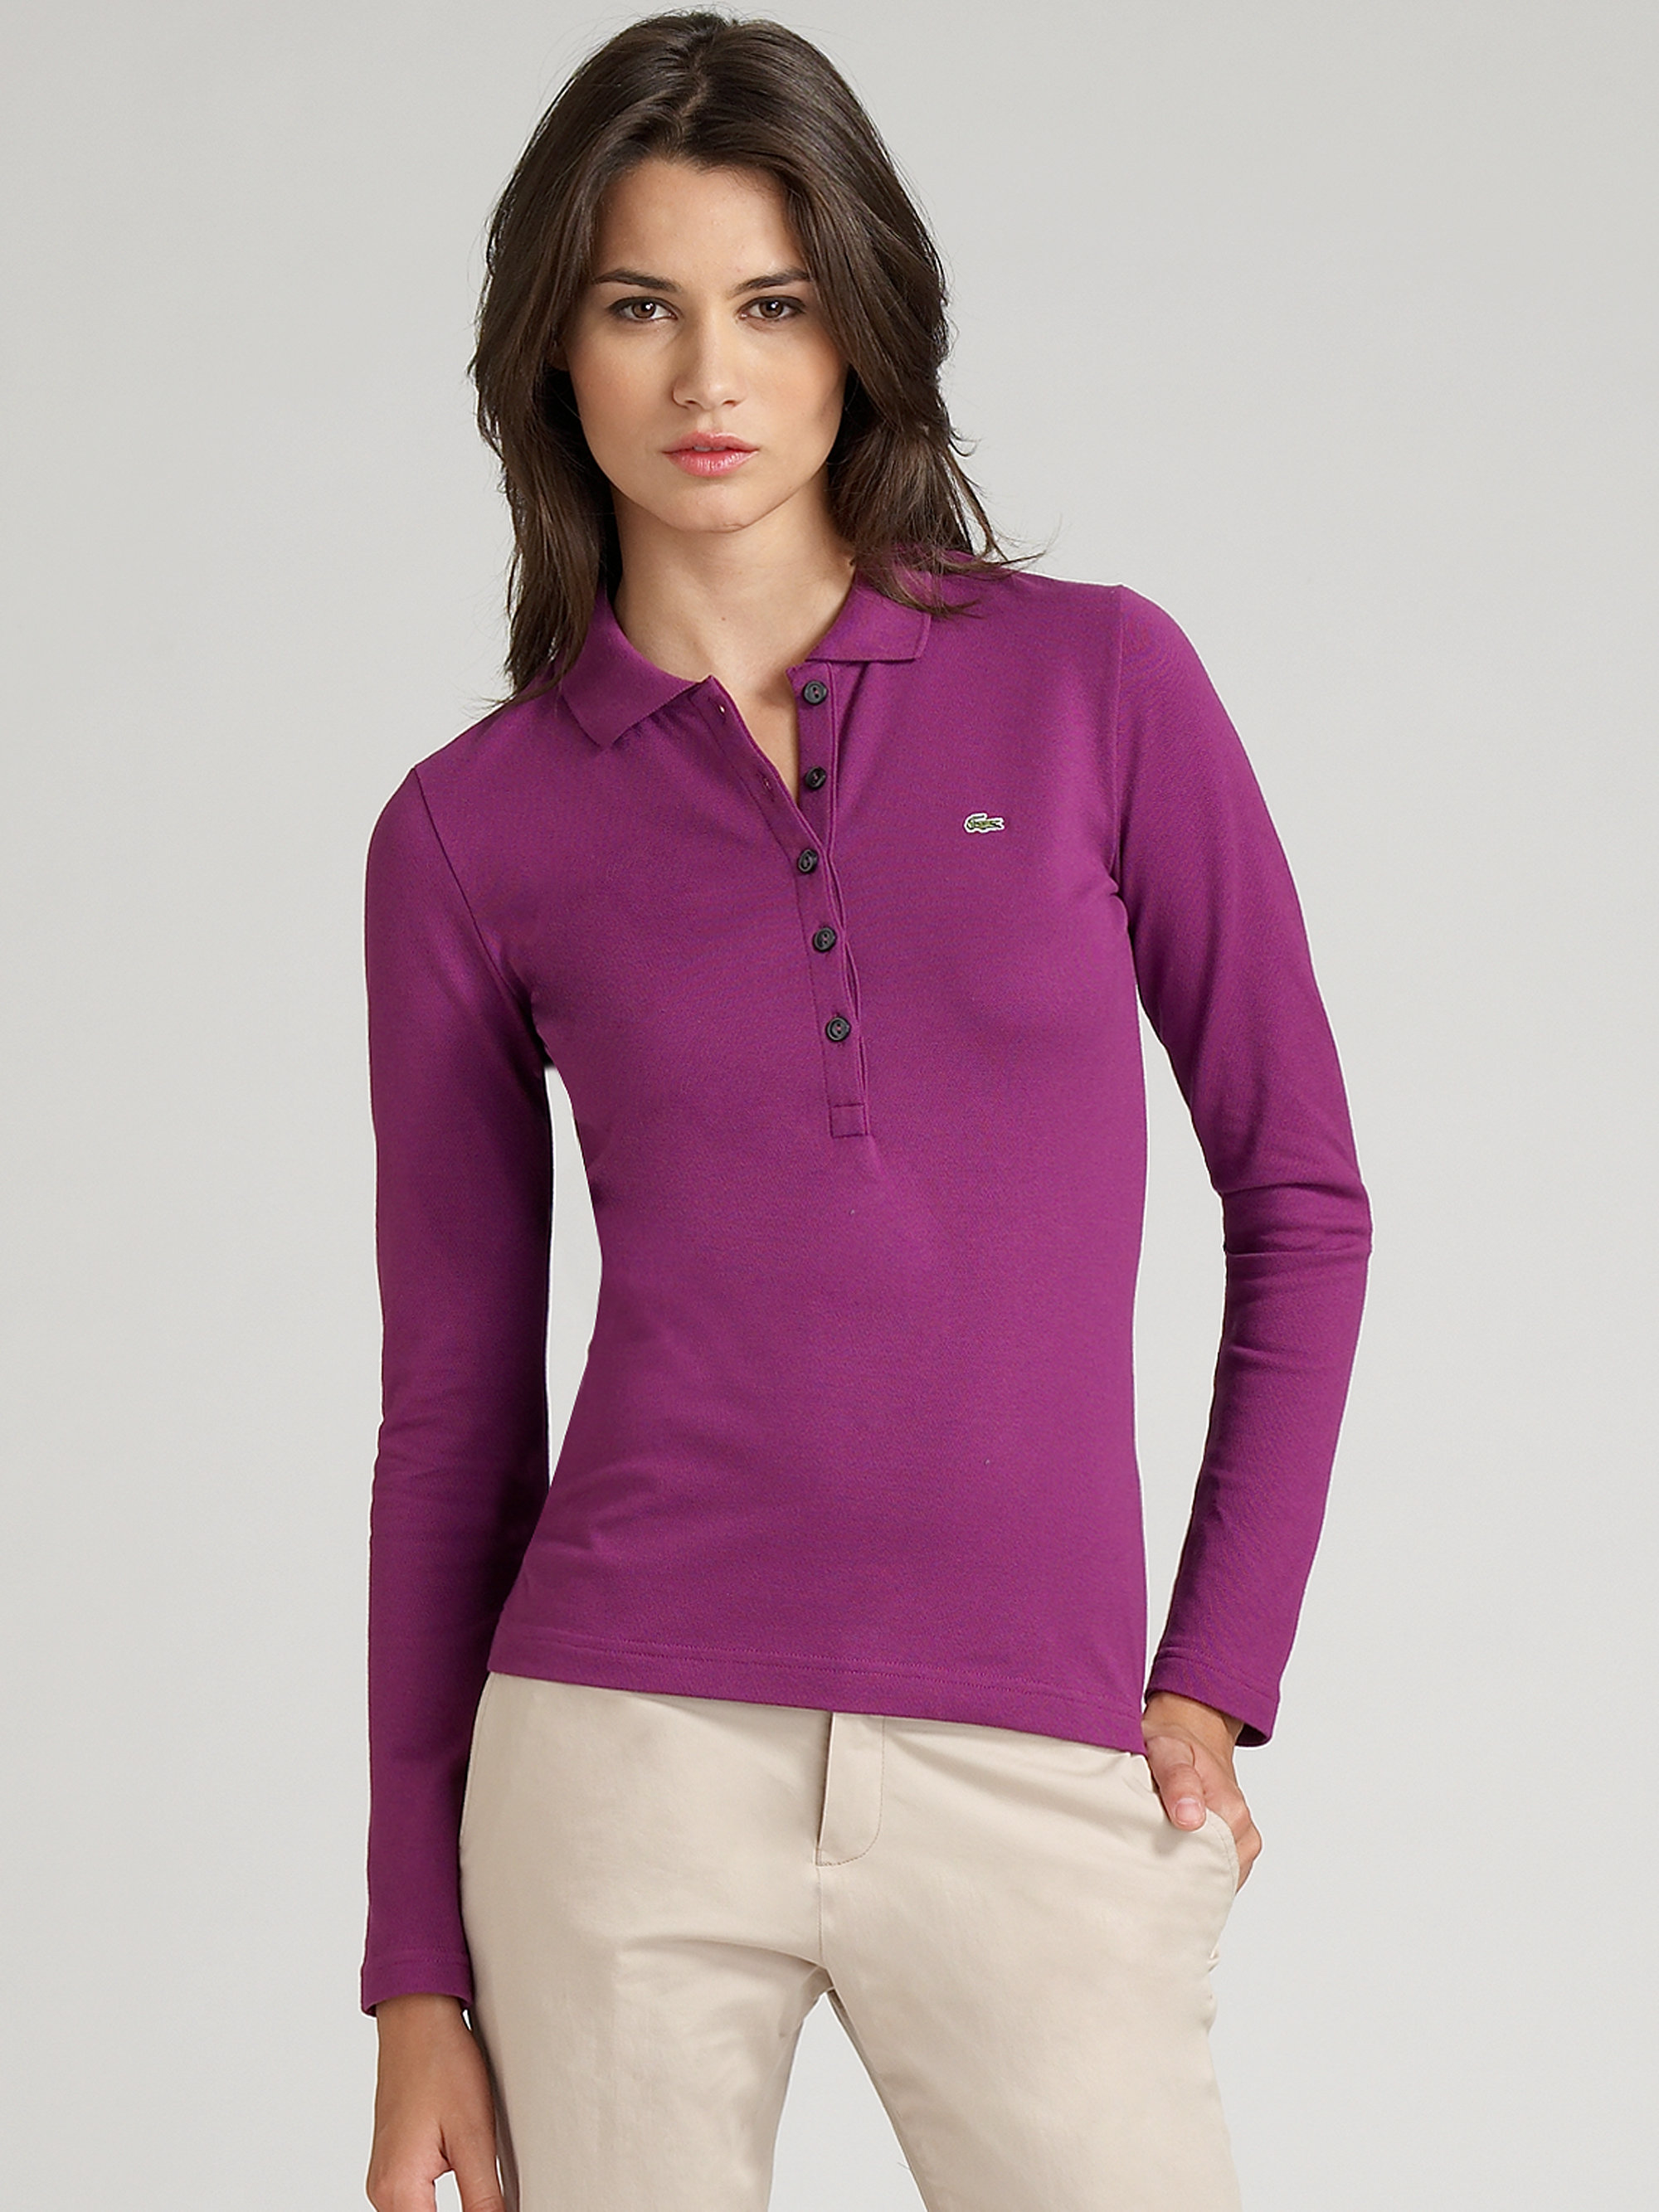 lacoste women's long sleeve polo shirts